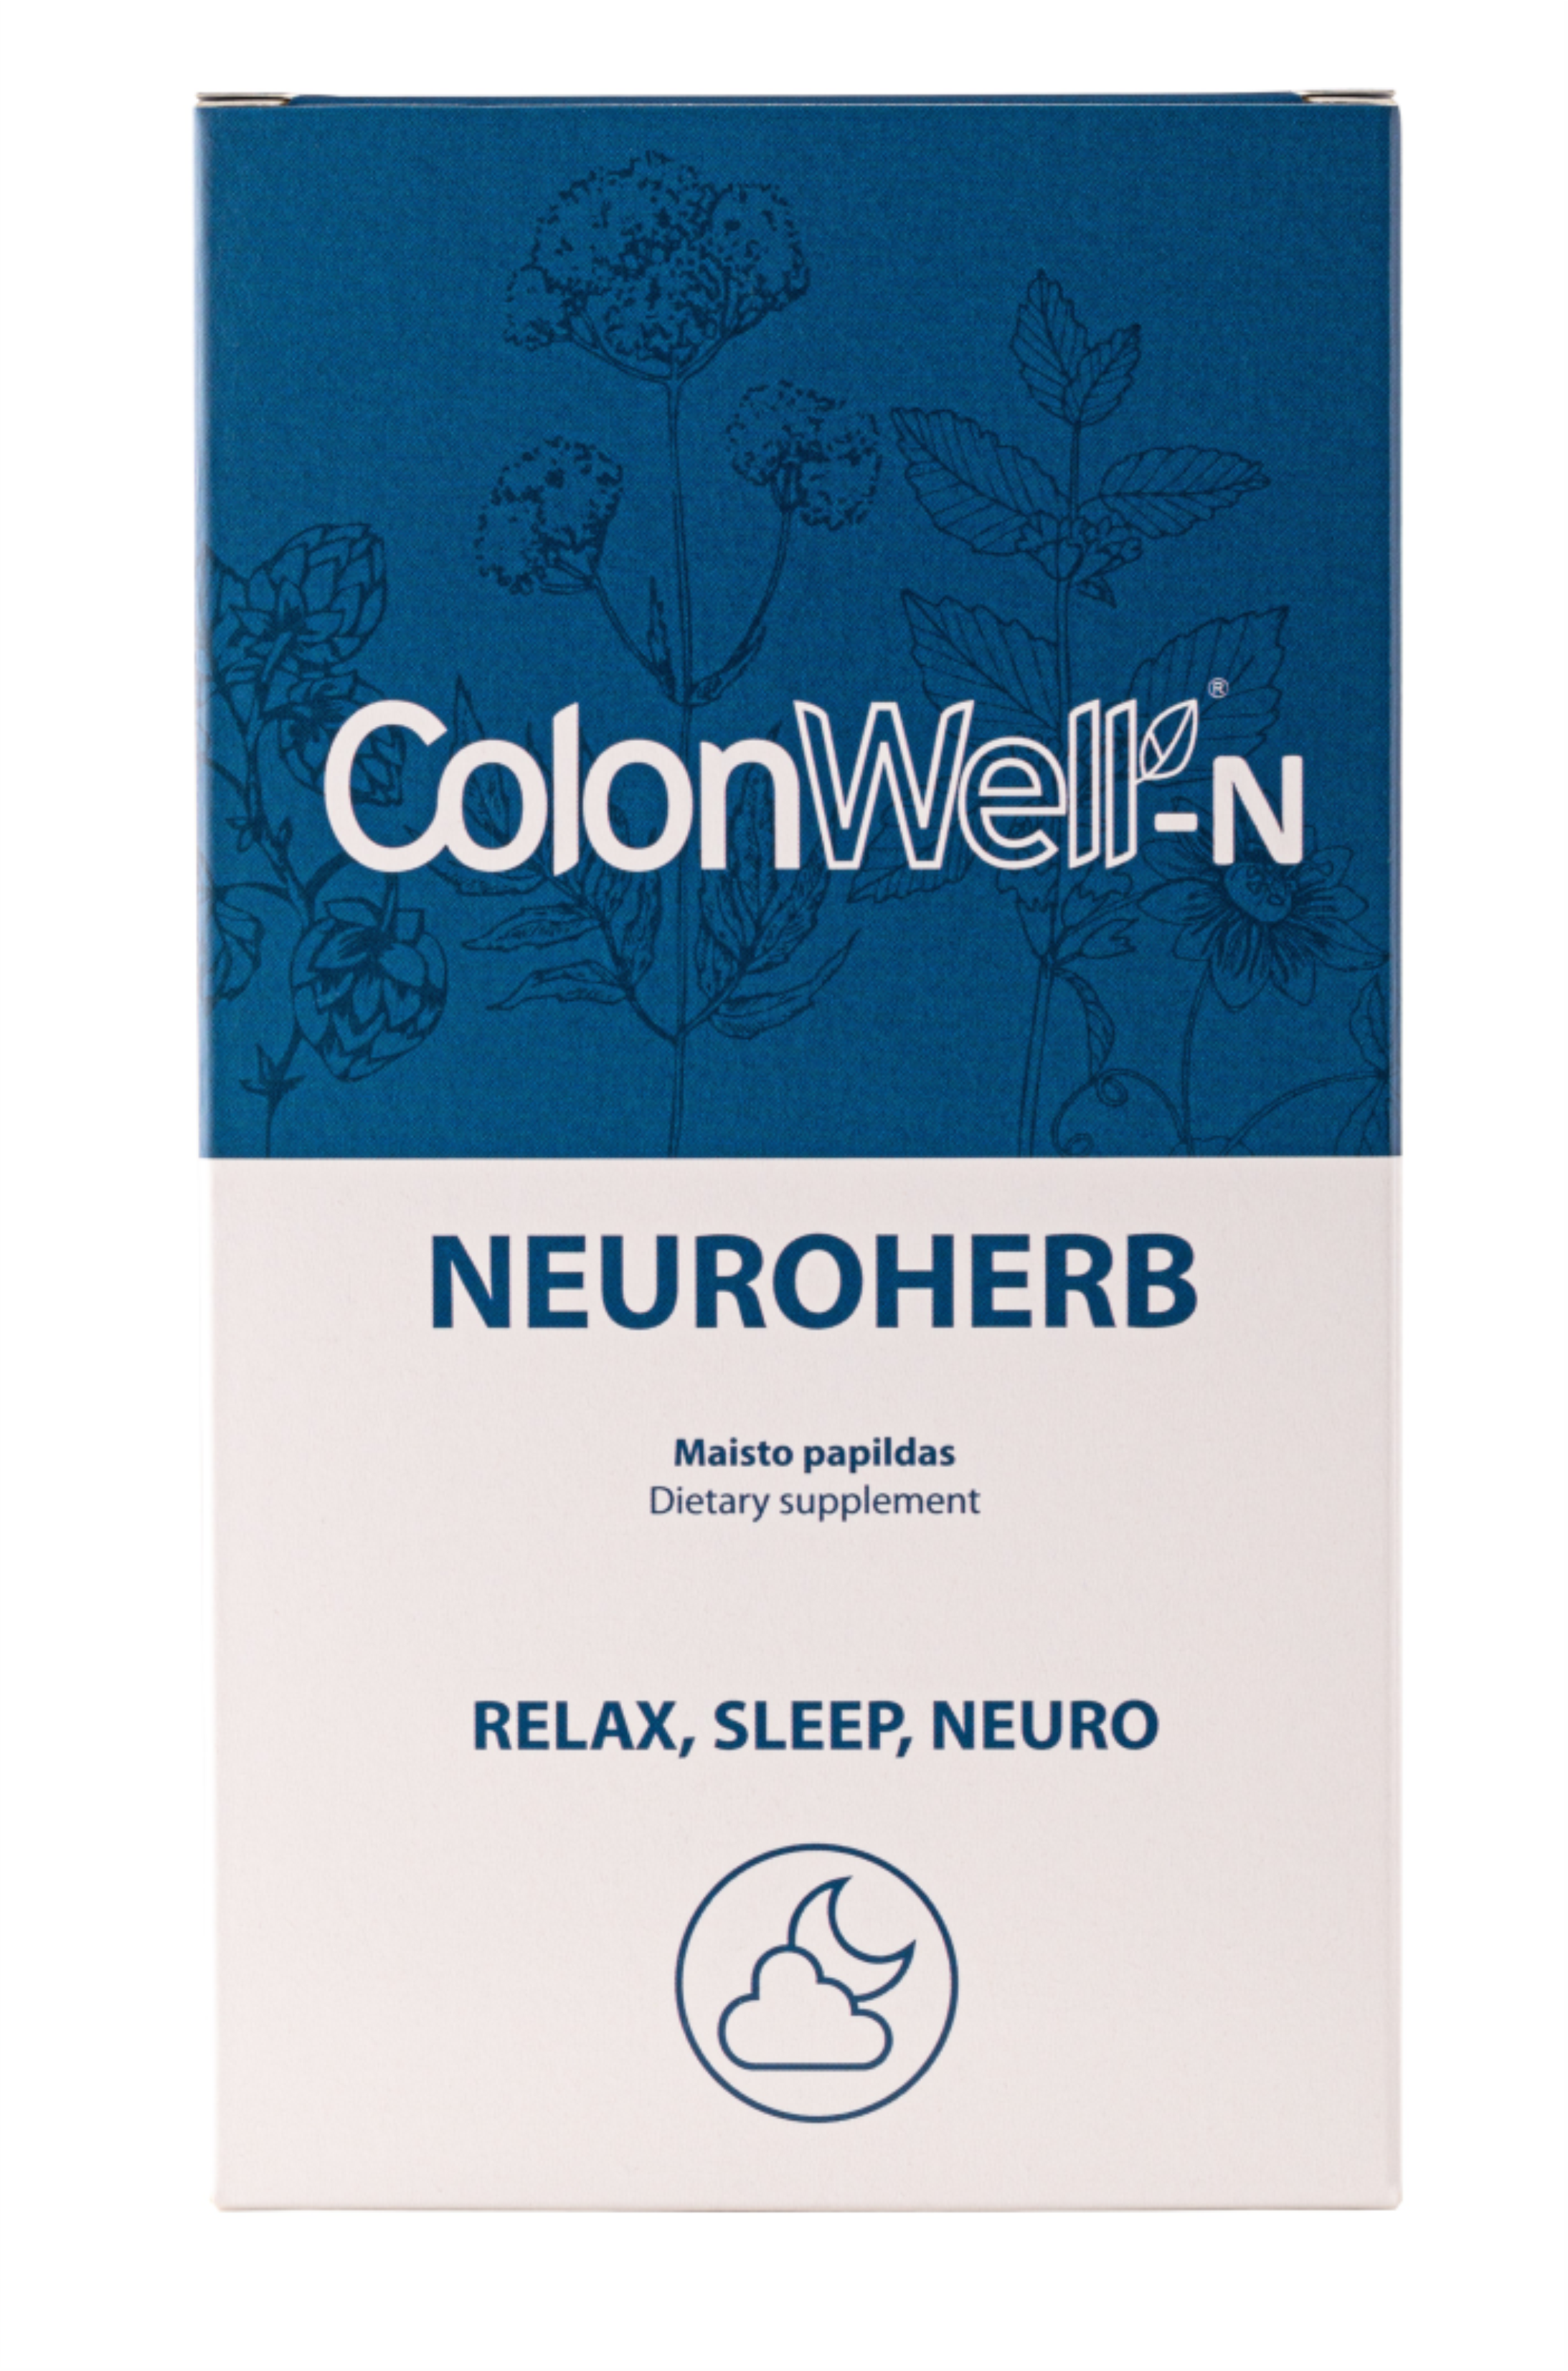 Colonwell.lt produktas - Neuroherb - maisto papildas, miegui, nervų sistemai